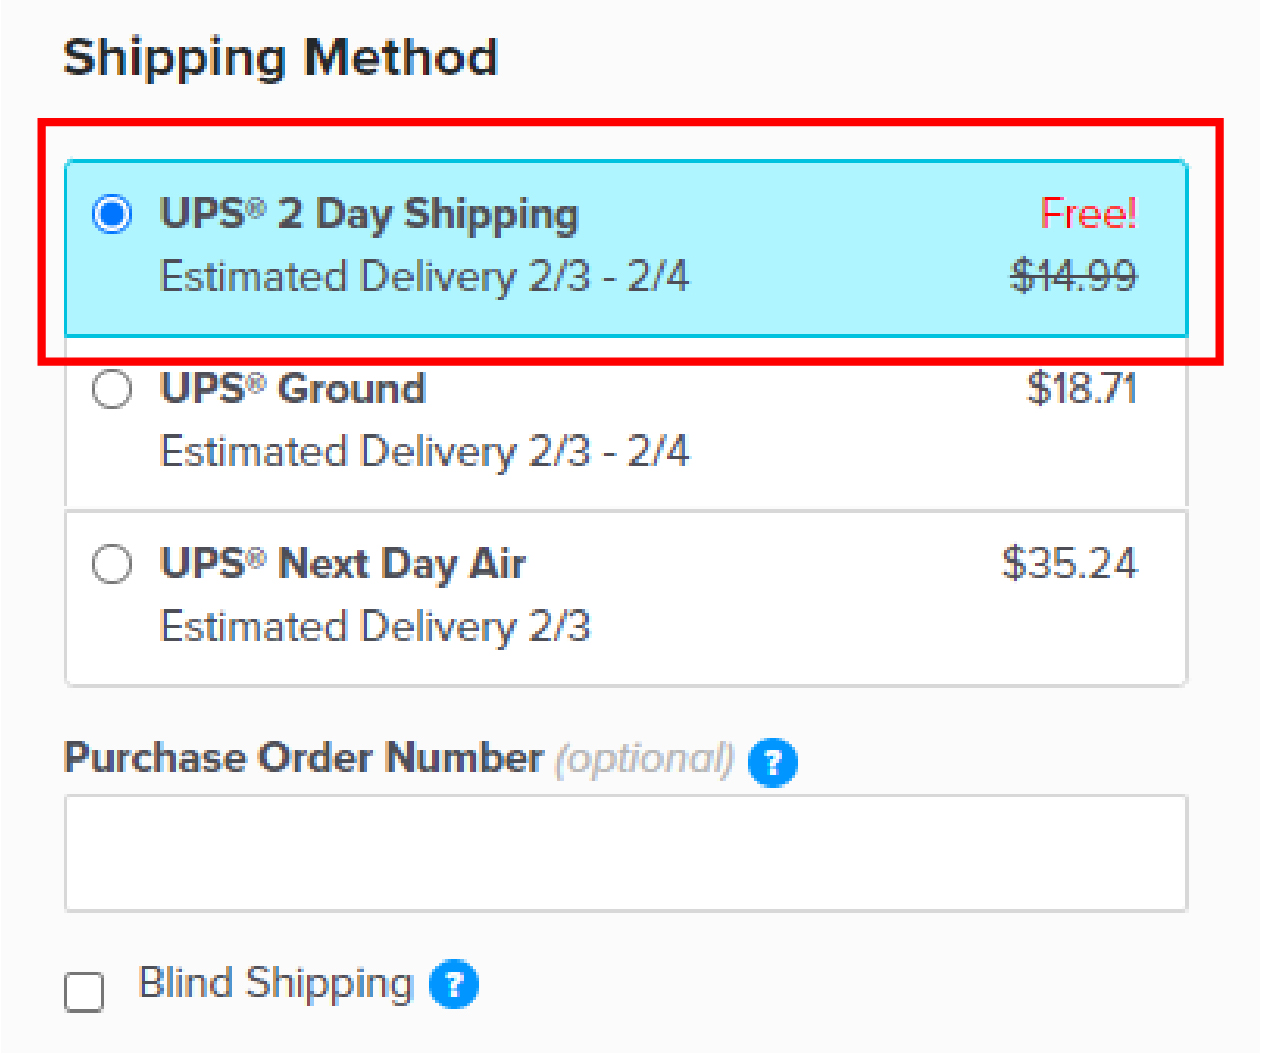 Shipping method shown as free